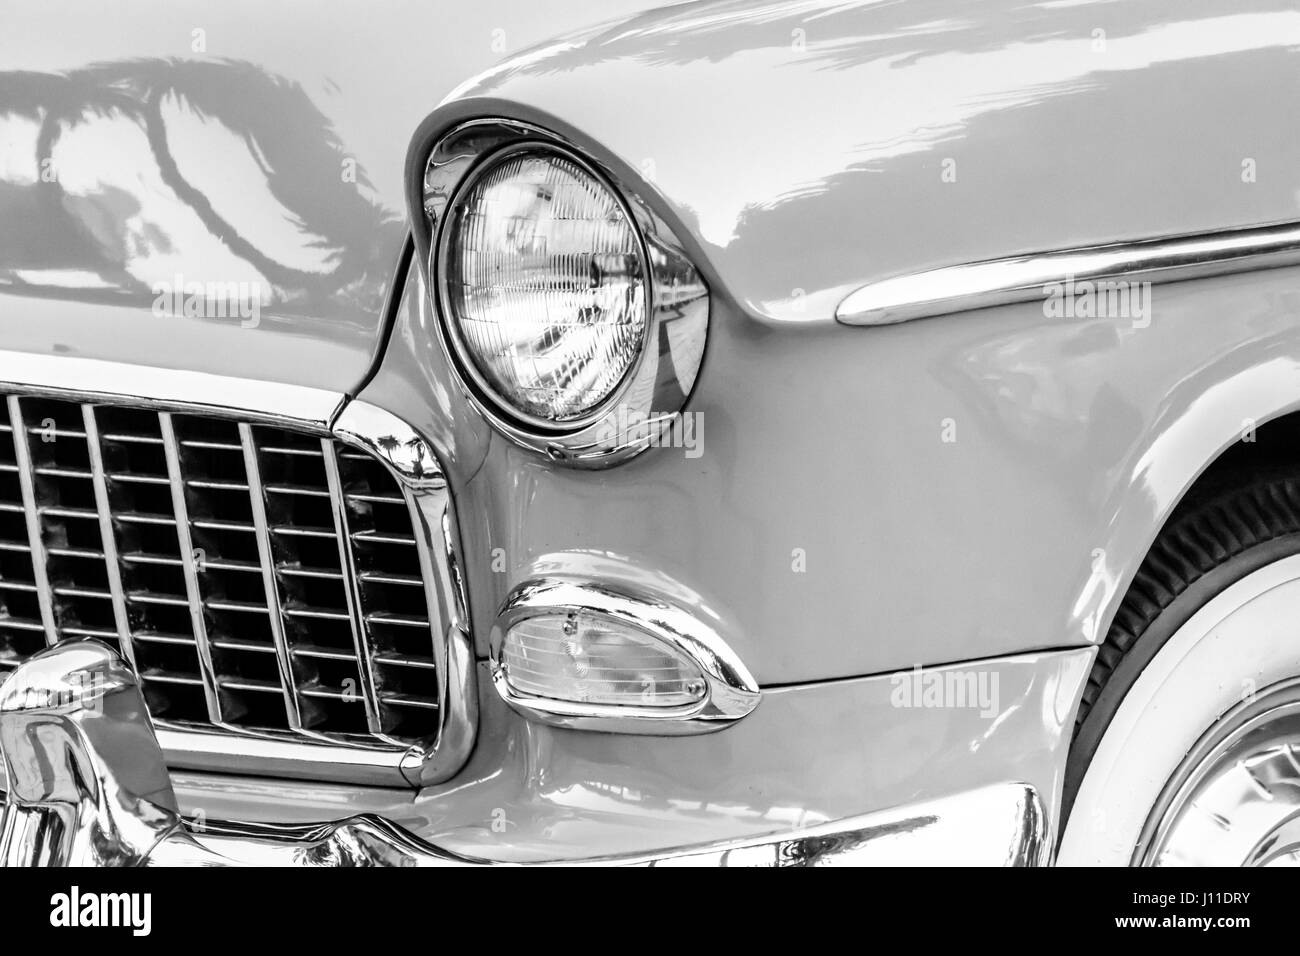 Close-Up Of Vintage Car Headlight Stock Photo